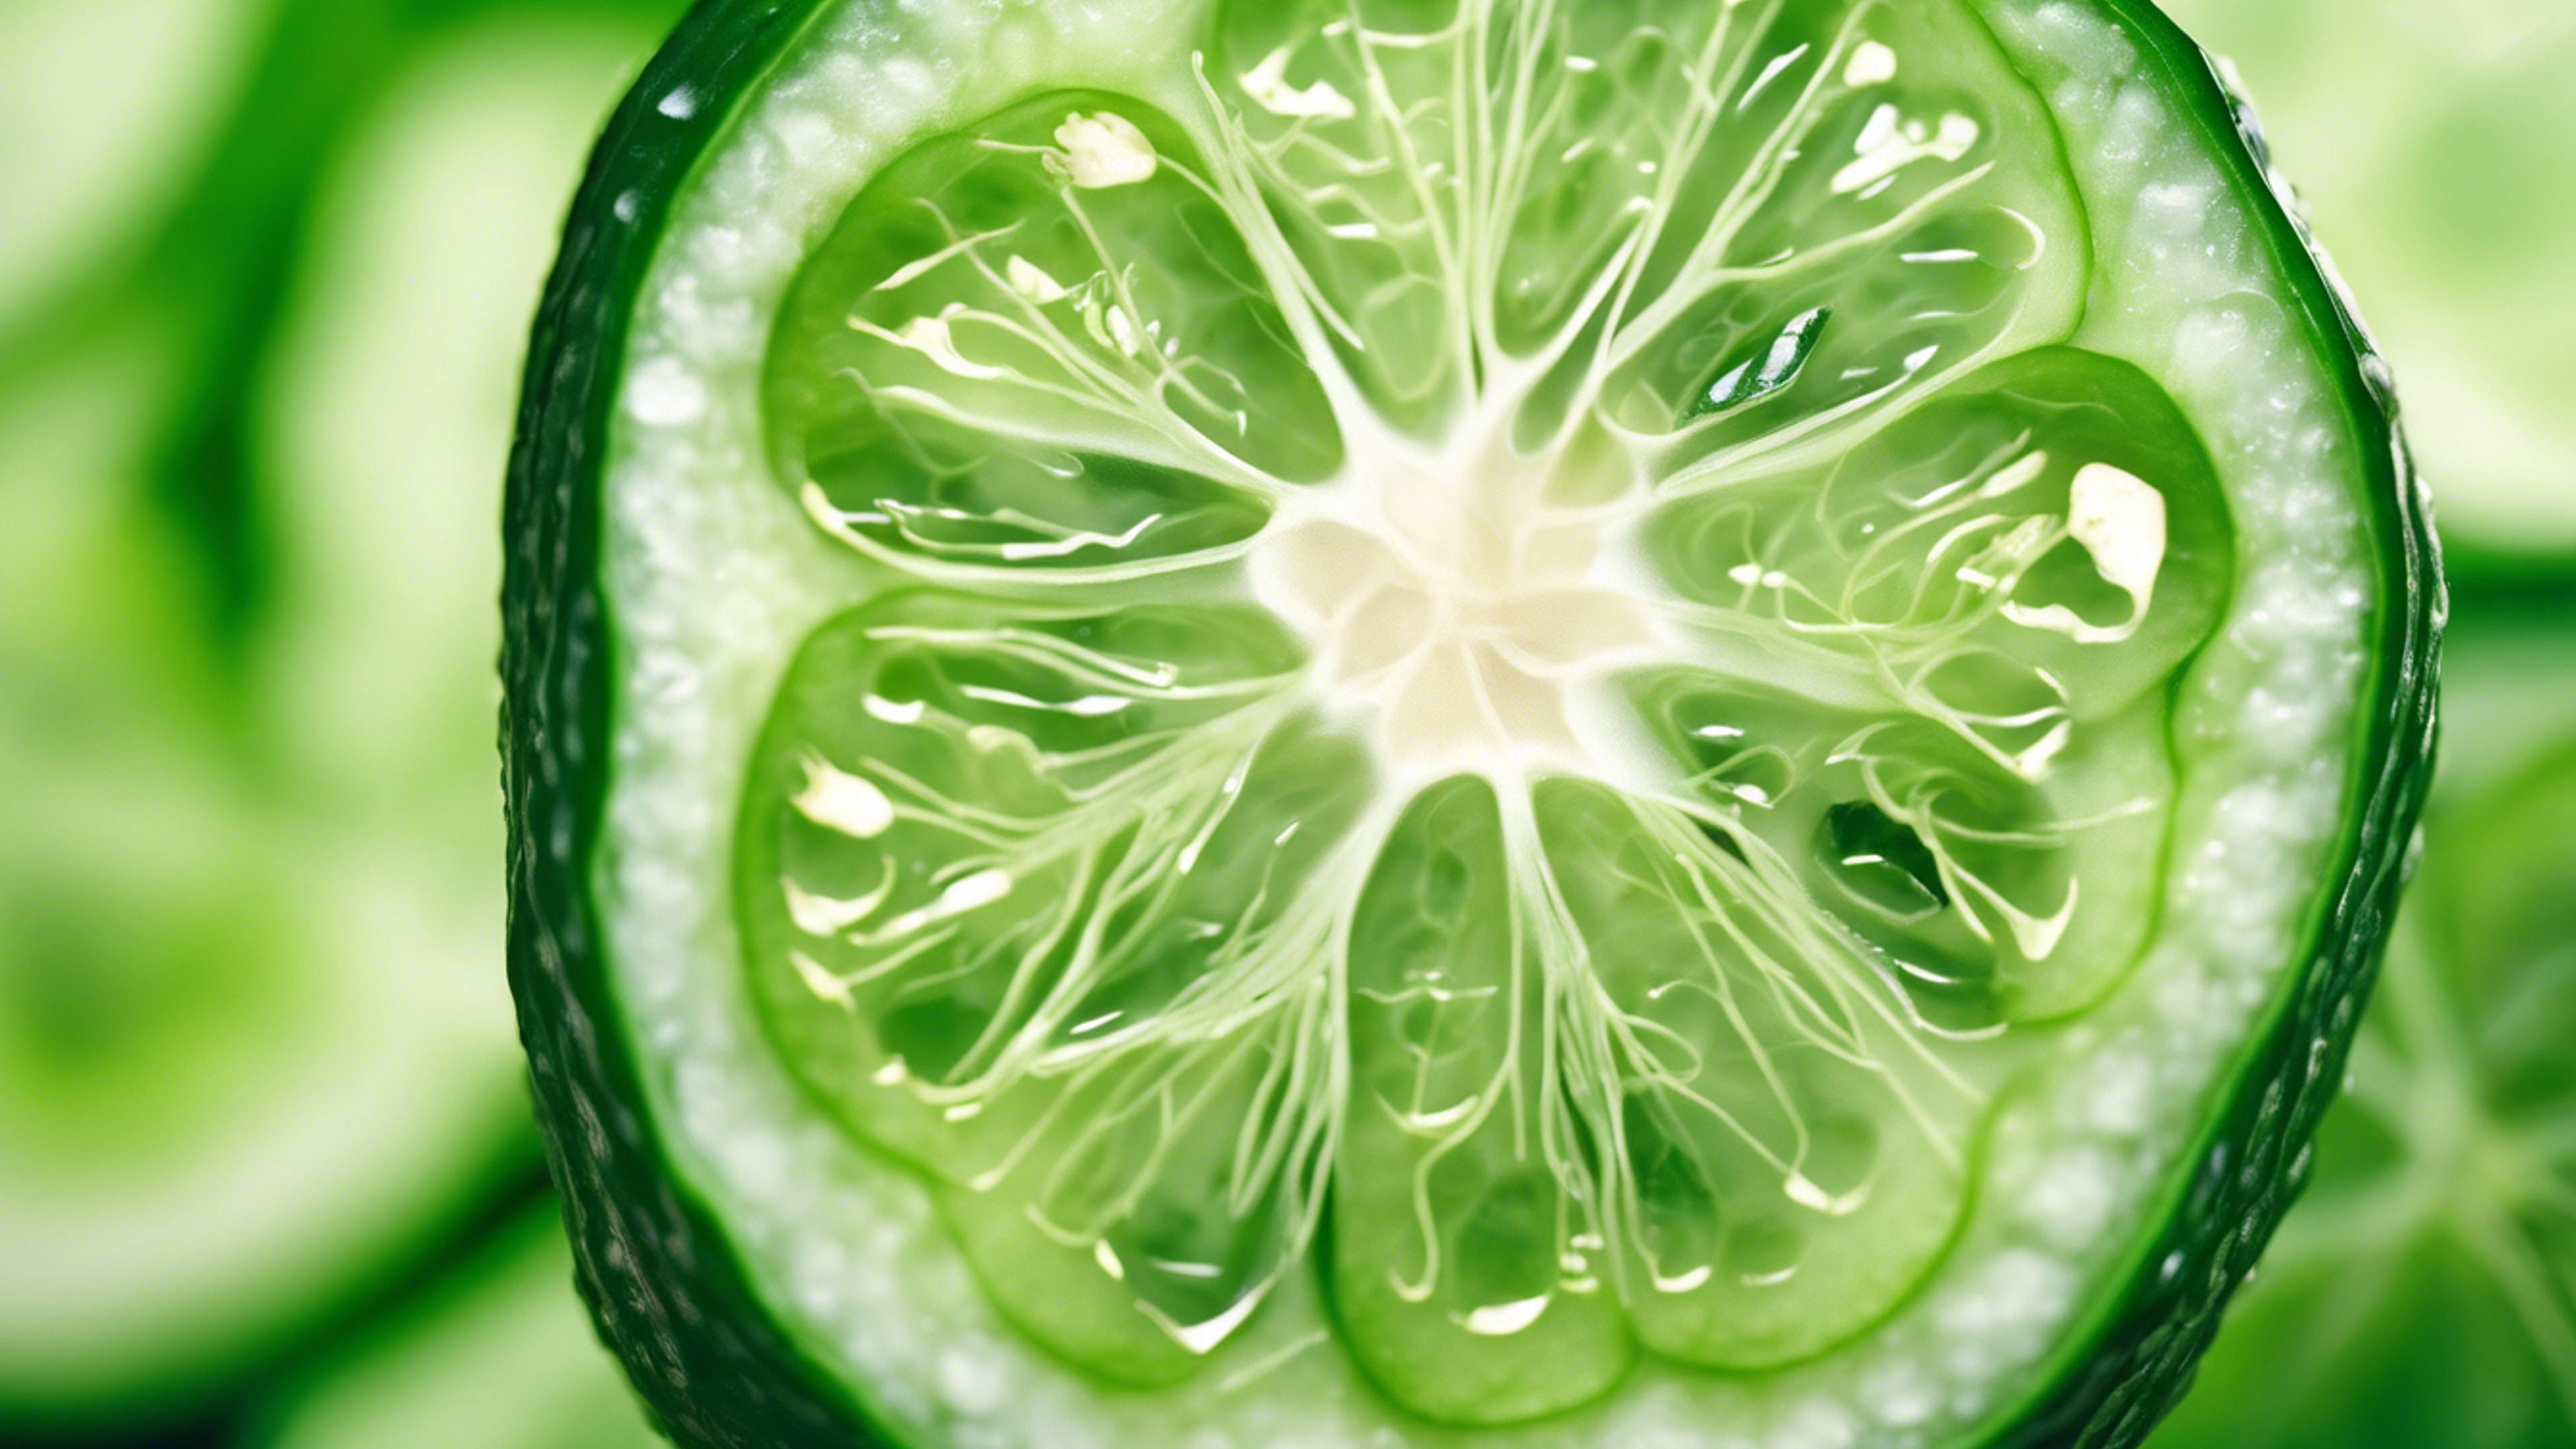 A closeup of a cucumber slice with cool green hues.壁紙[ac6b145182c6484fa5b7]